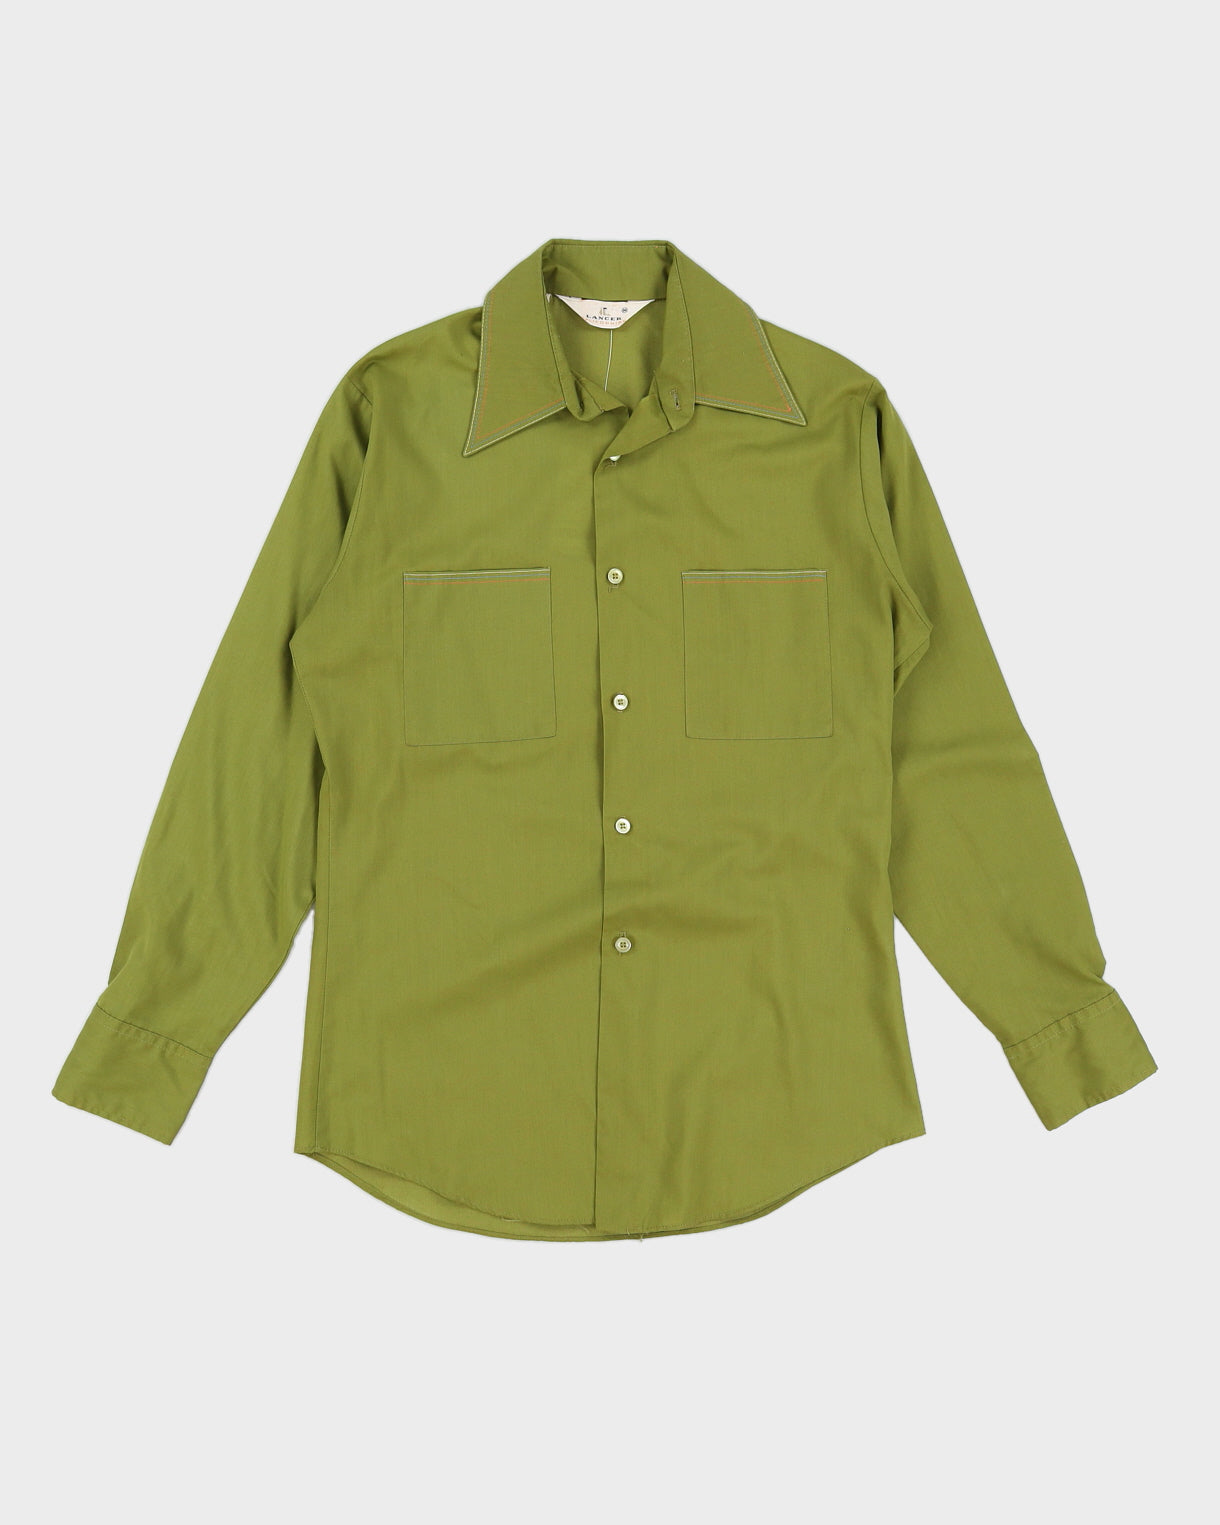 Vintage 70s Lancer California Green Long Sleeve Shirt - M